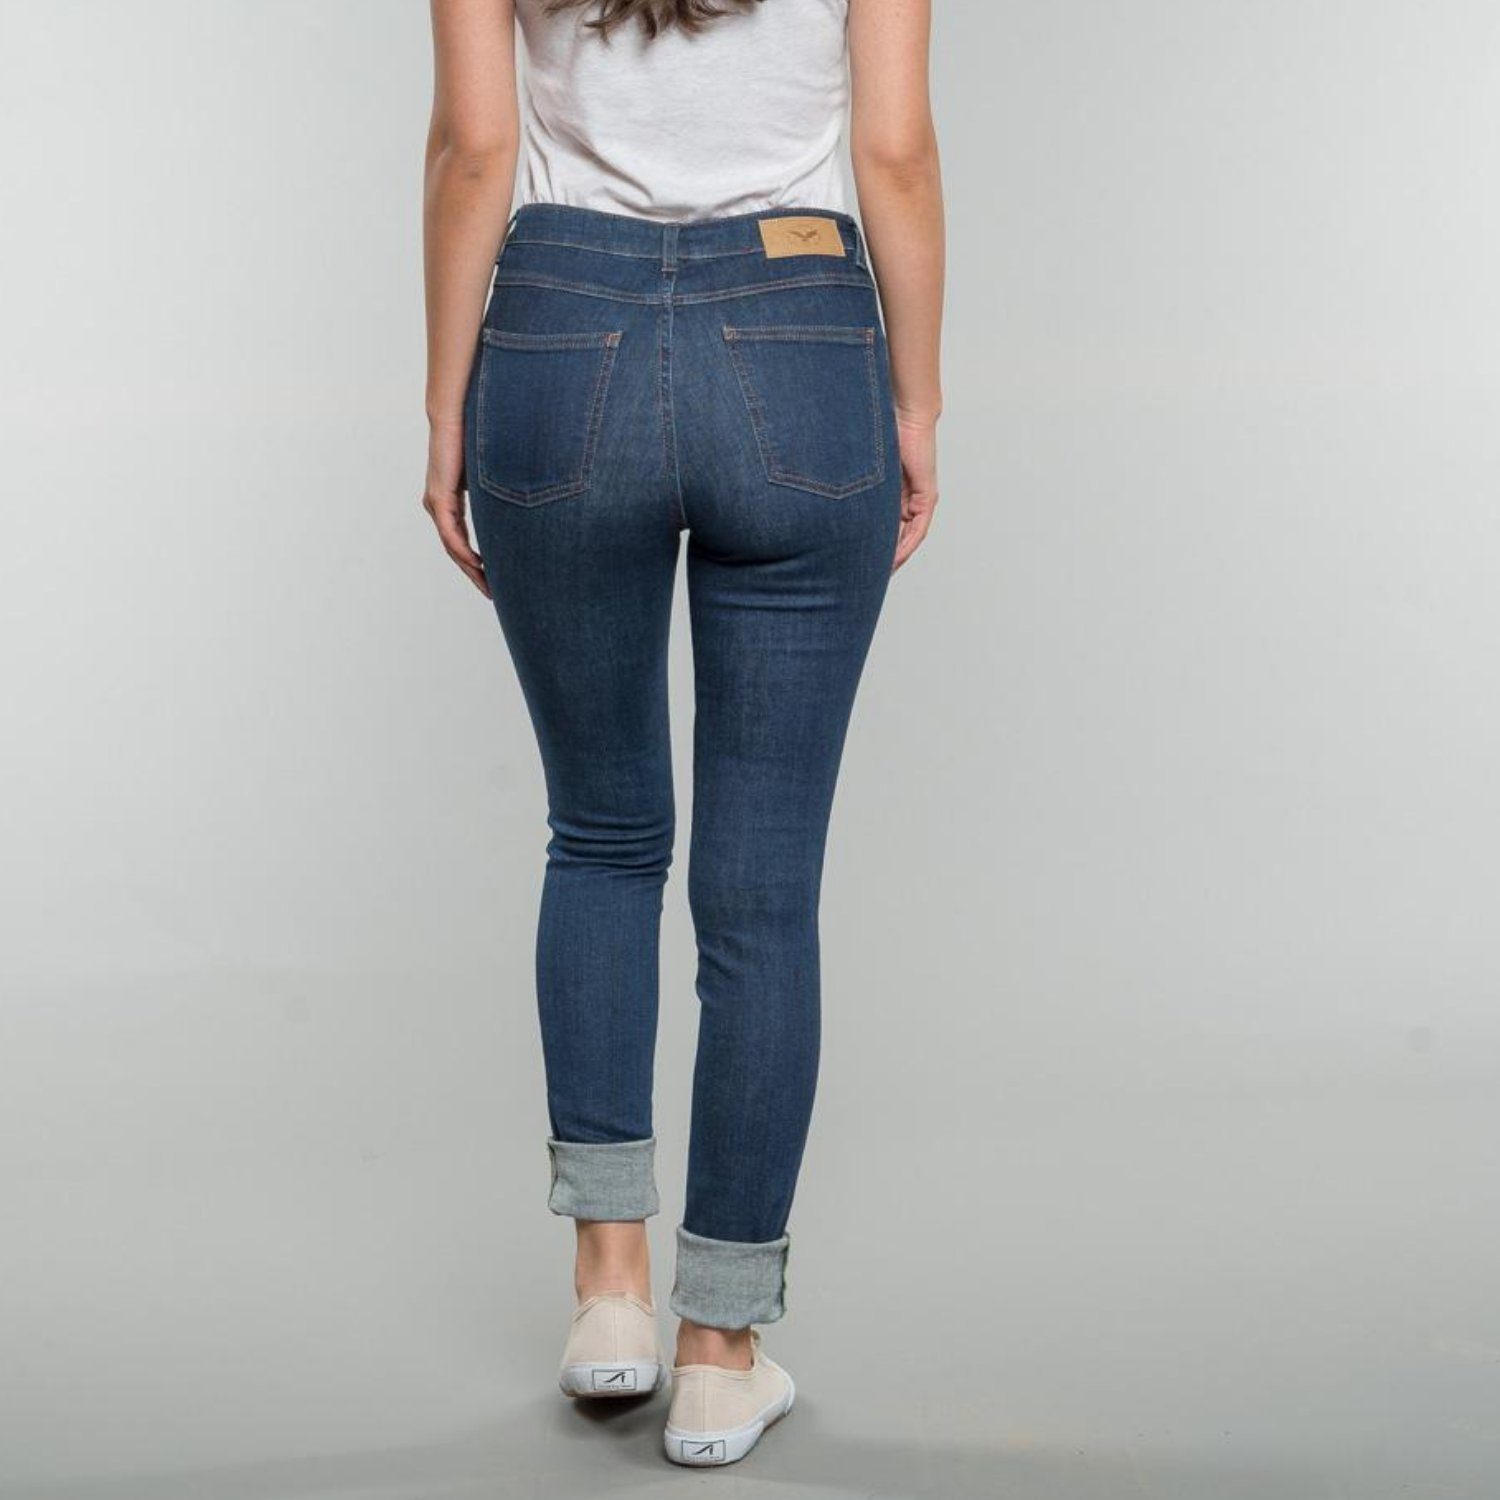 Feuervogl High-waist-Jeans fv-Han:na, Waist High Blue Classic Denim, Damenjeans 5-Pocket-Style, Hyperflex Skinny, High Waist